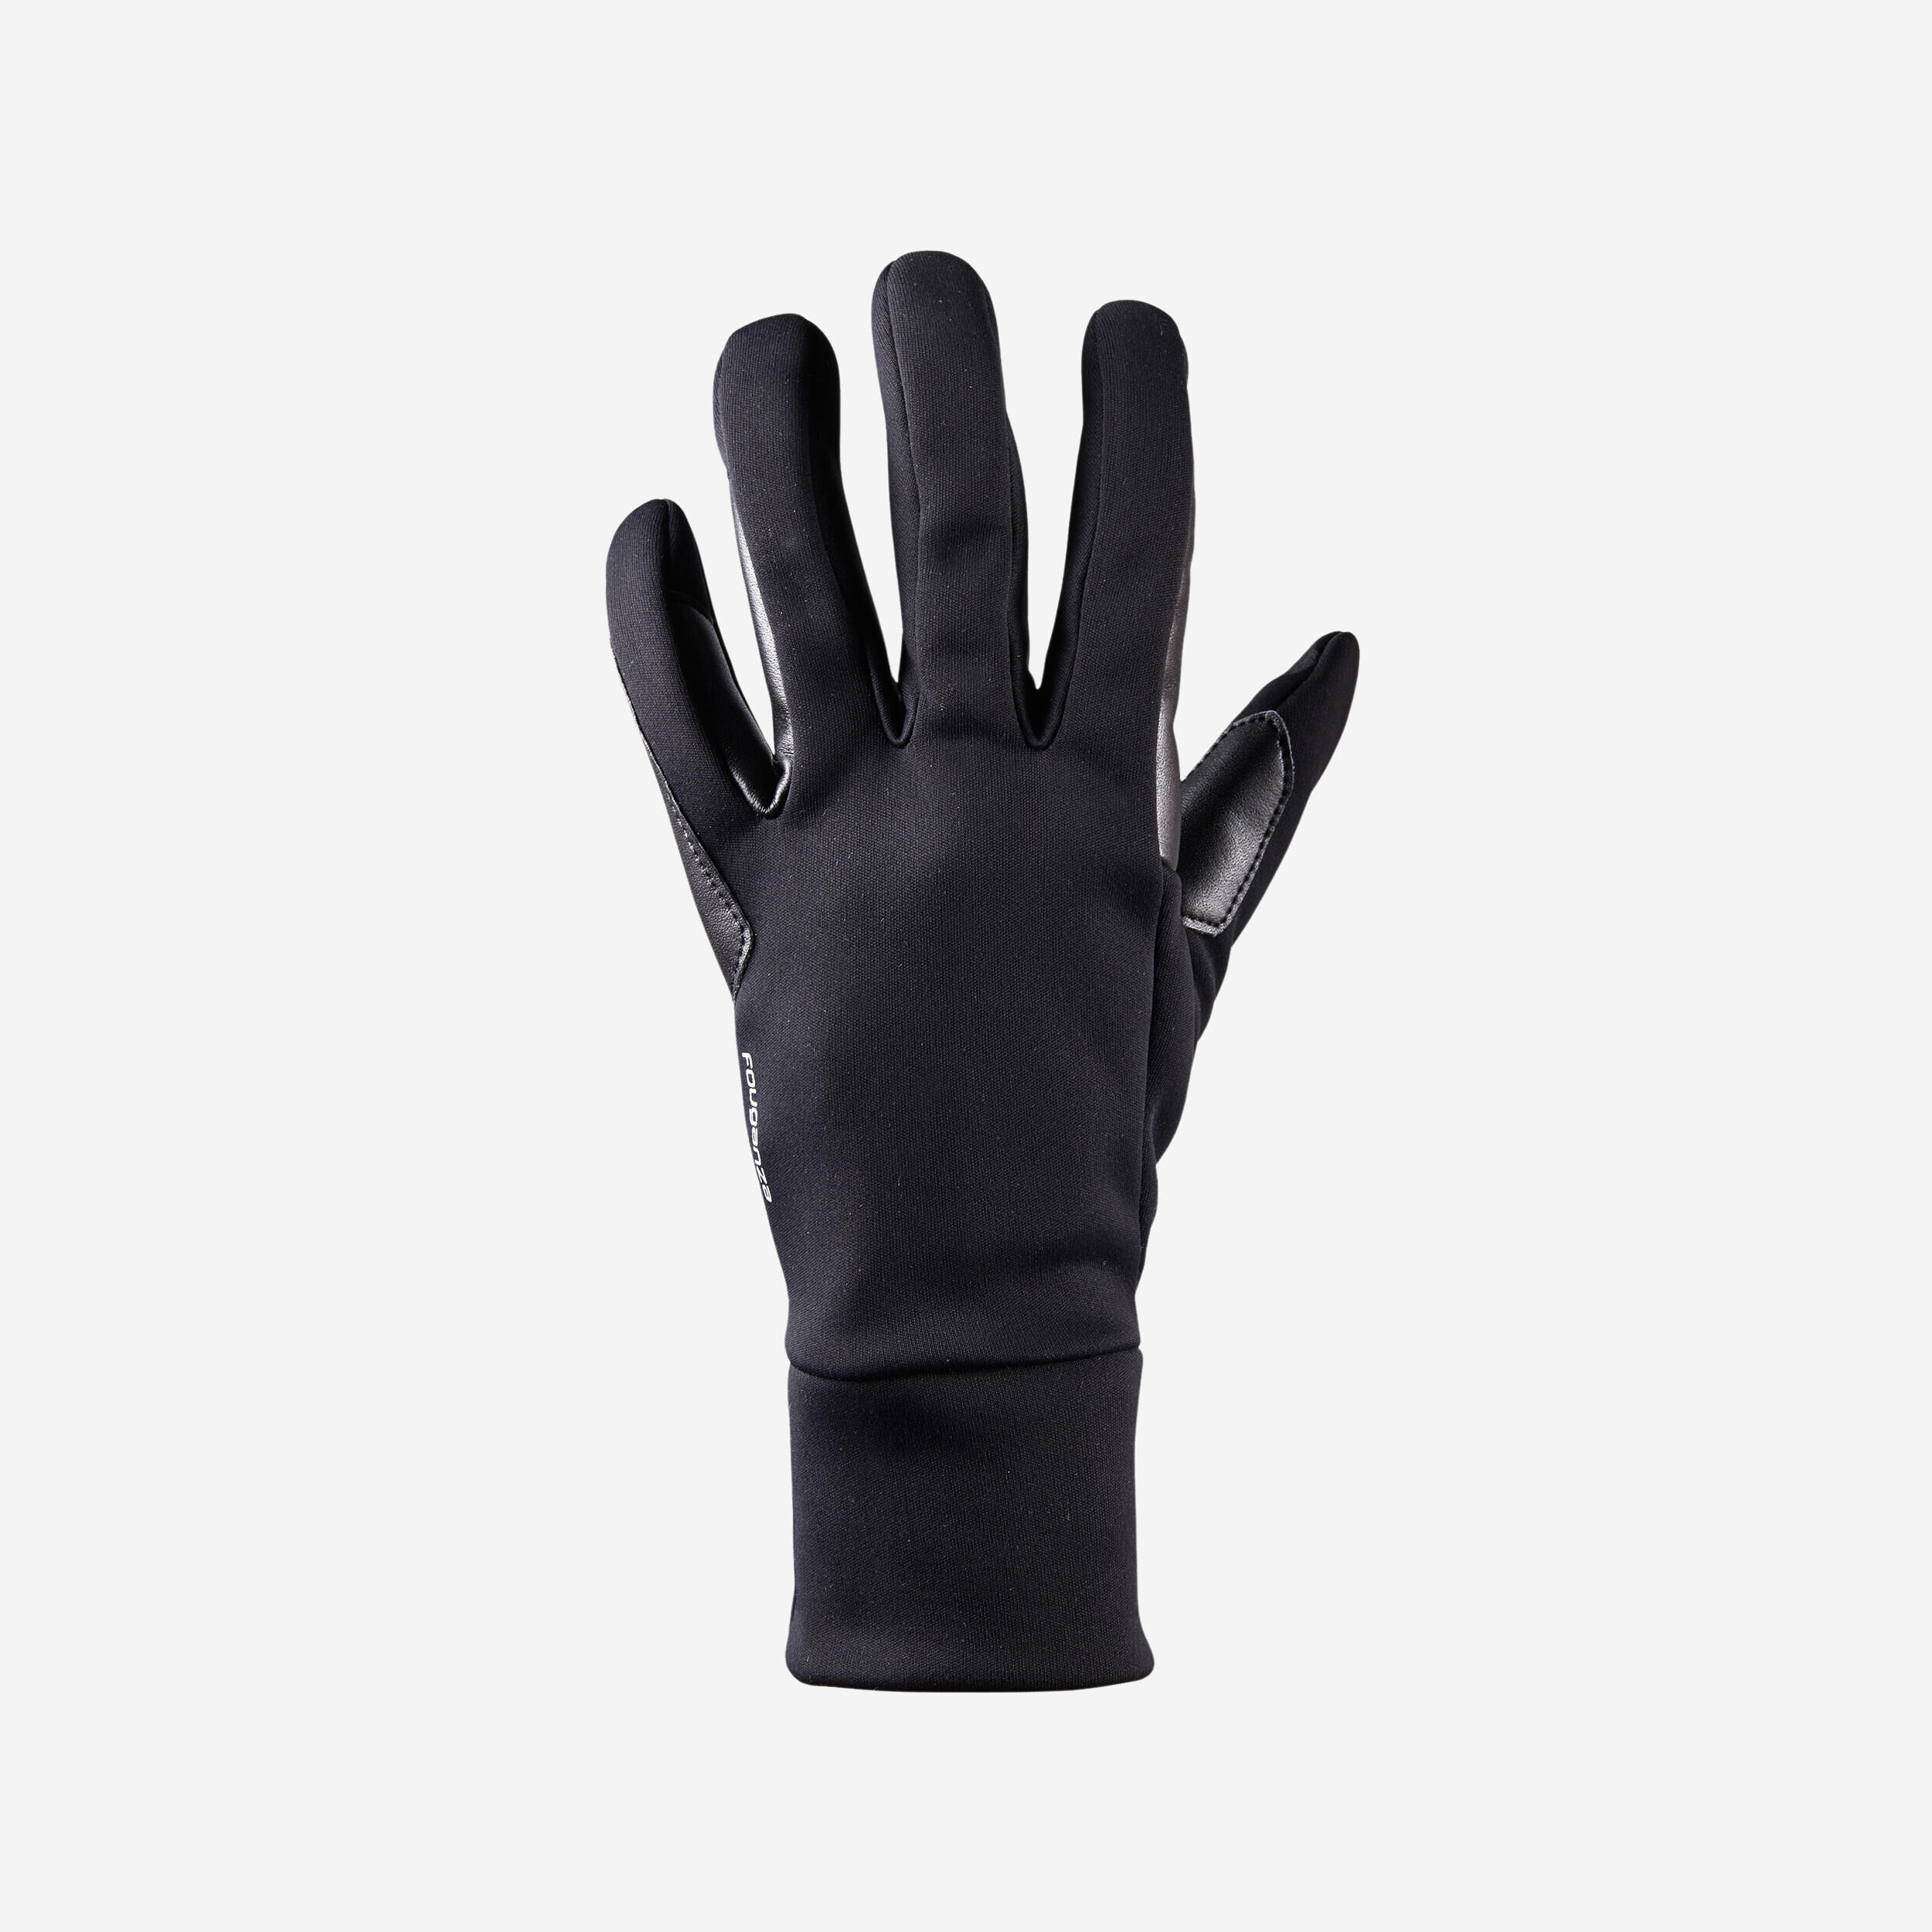 FOUGANZA 100 Warm Women's Horse Riding Gloves - Black